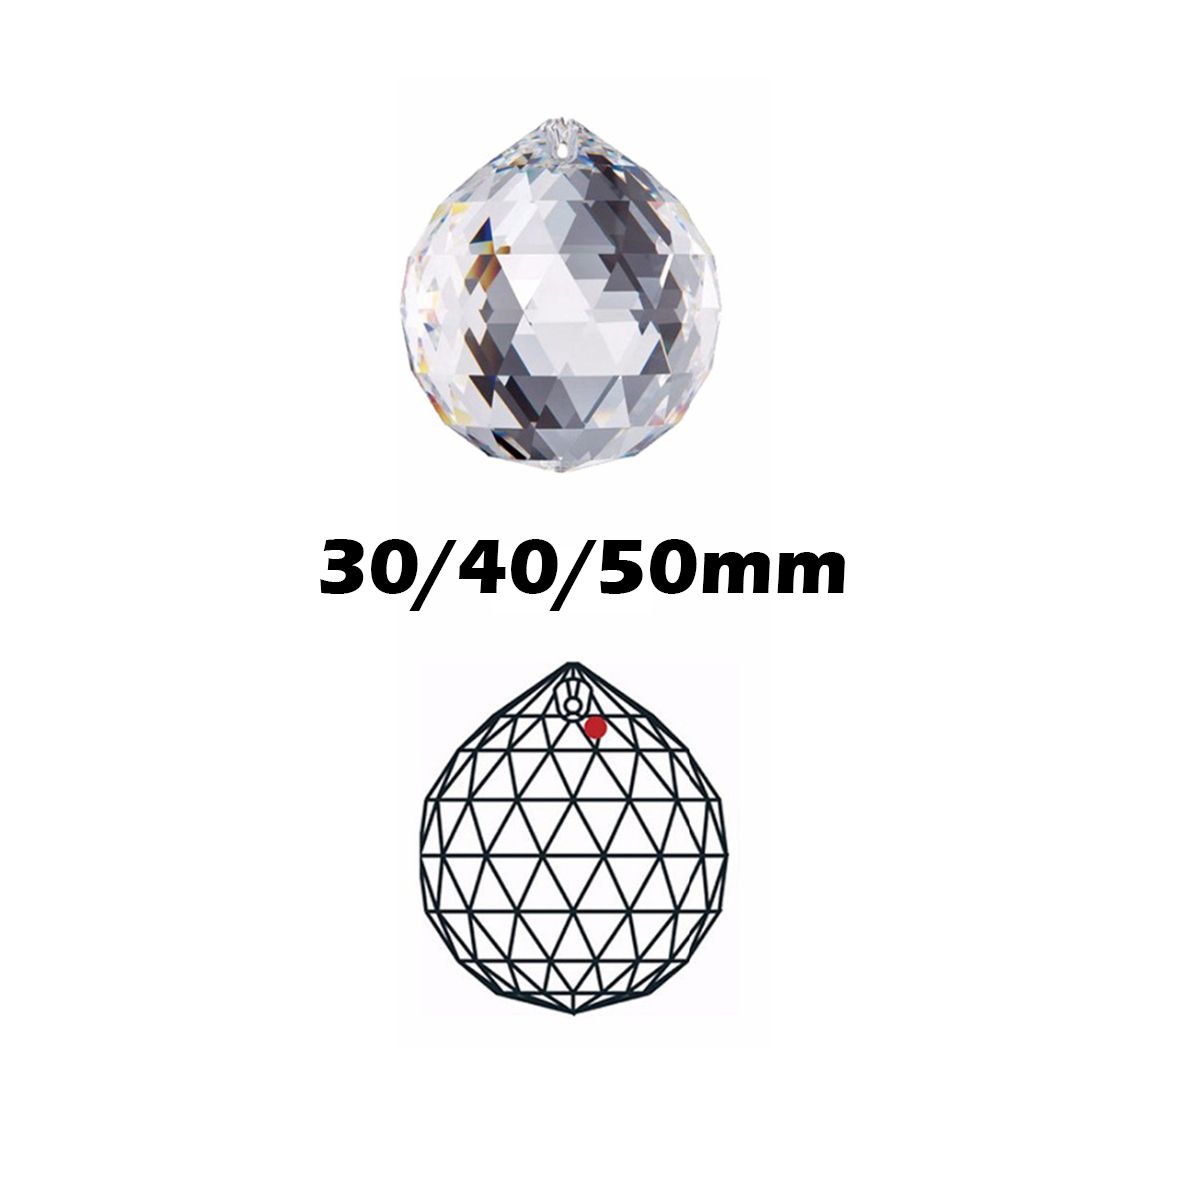 A-Set304050mm-Chandelier-Sparkling-Colorful-Hanging-Crystal-Prism-Ball-for-Pendant-1688925